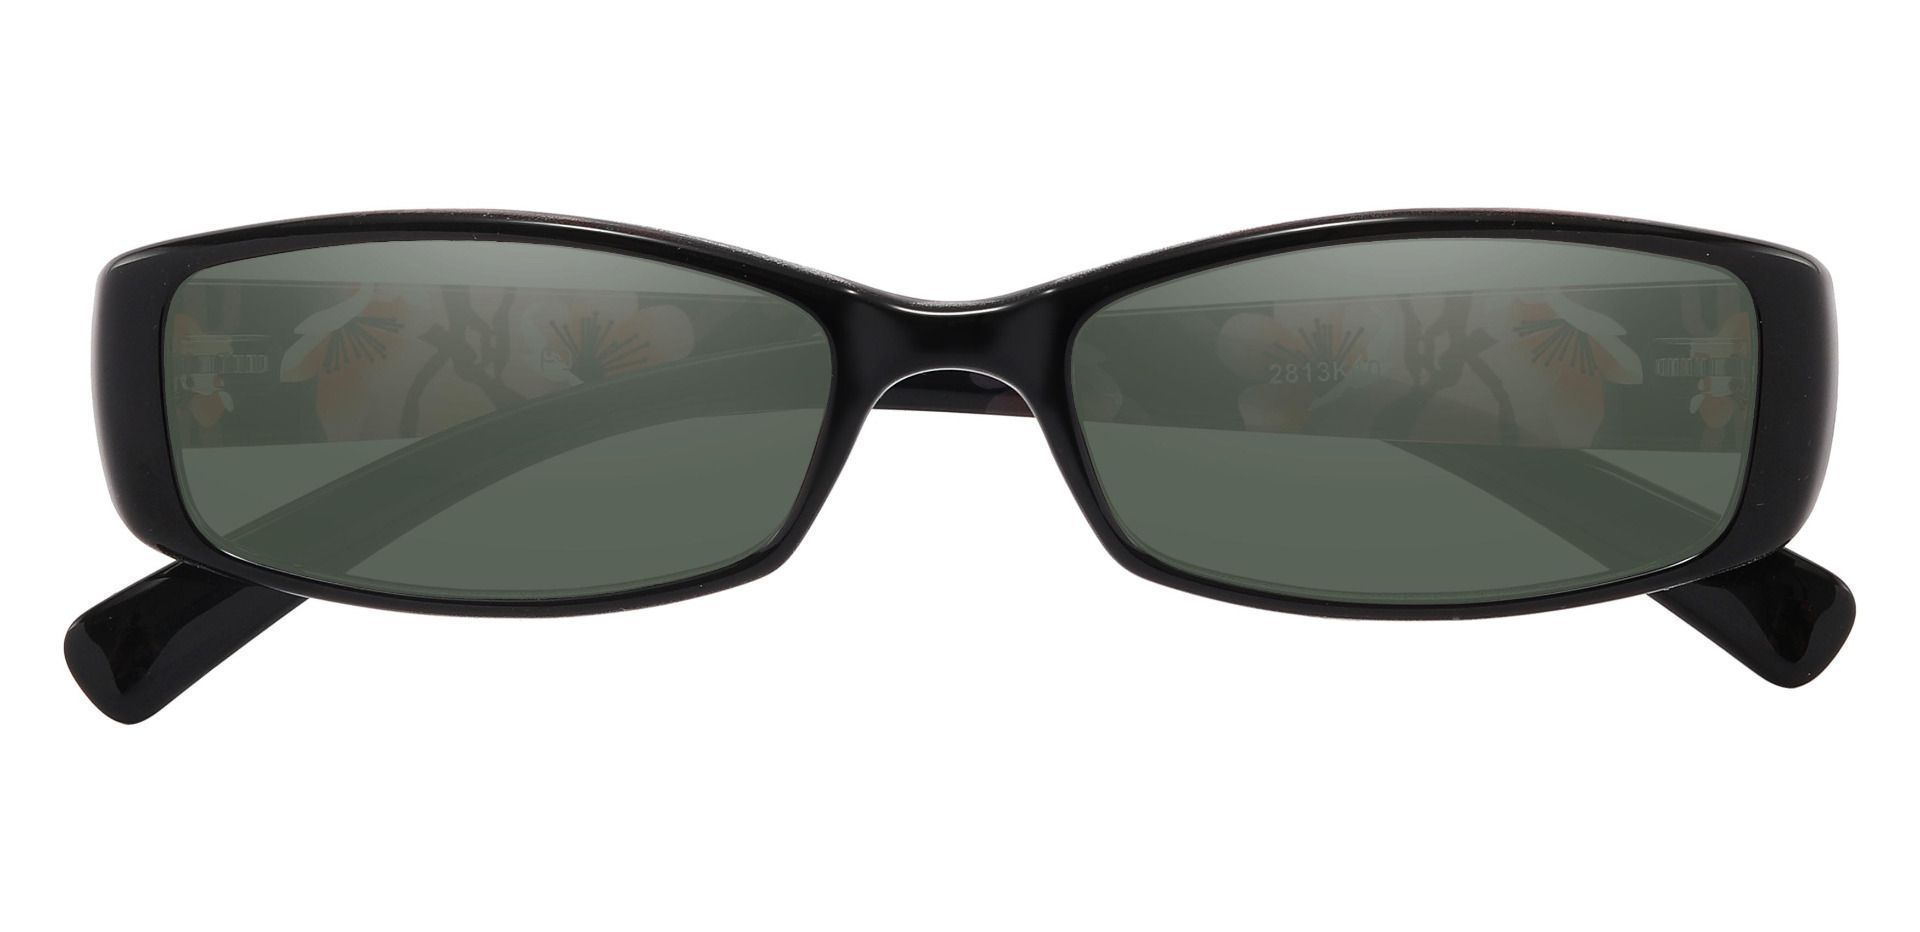 Medora Rectangle Single Vision Sunglasses - Black Frame With Green Lenses